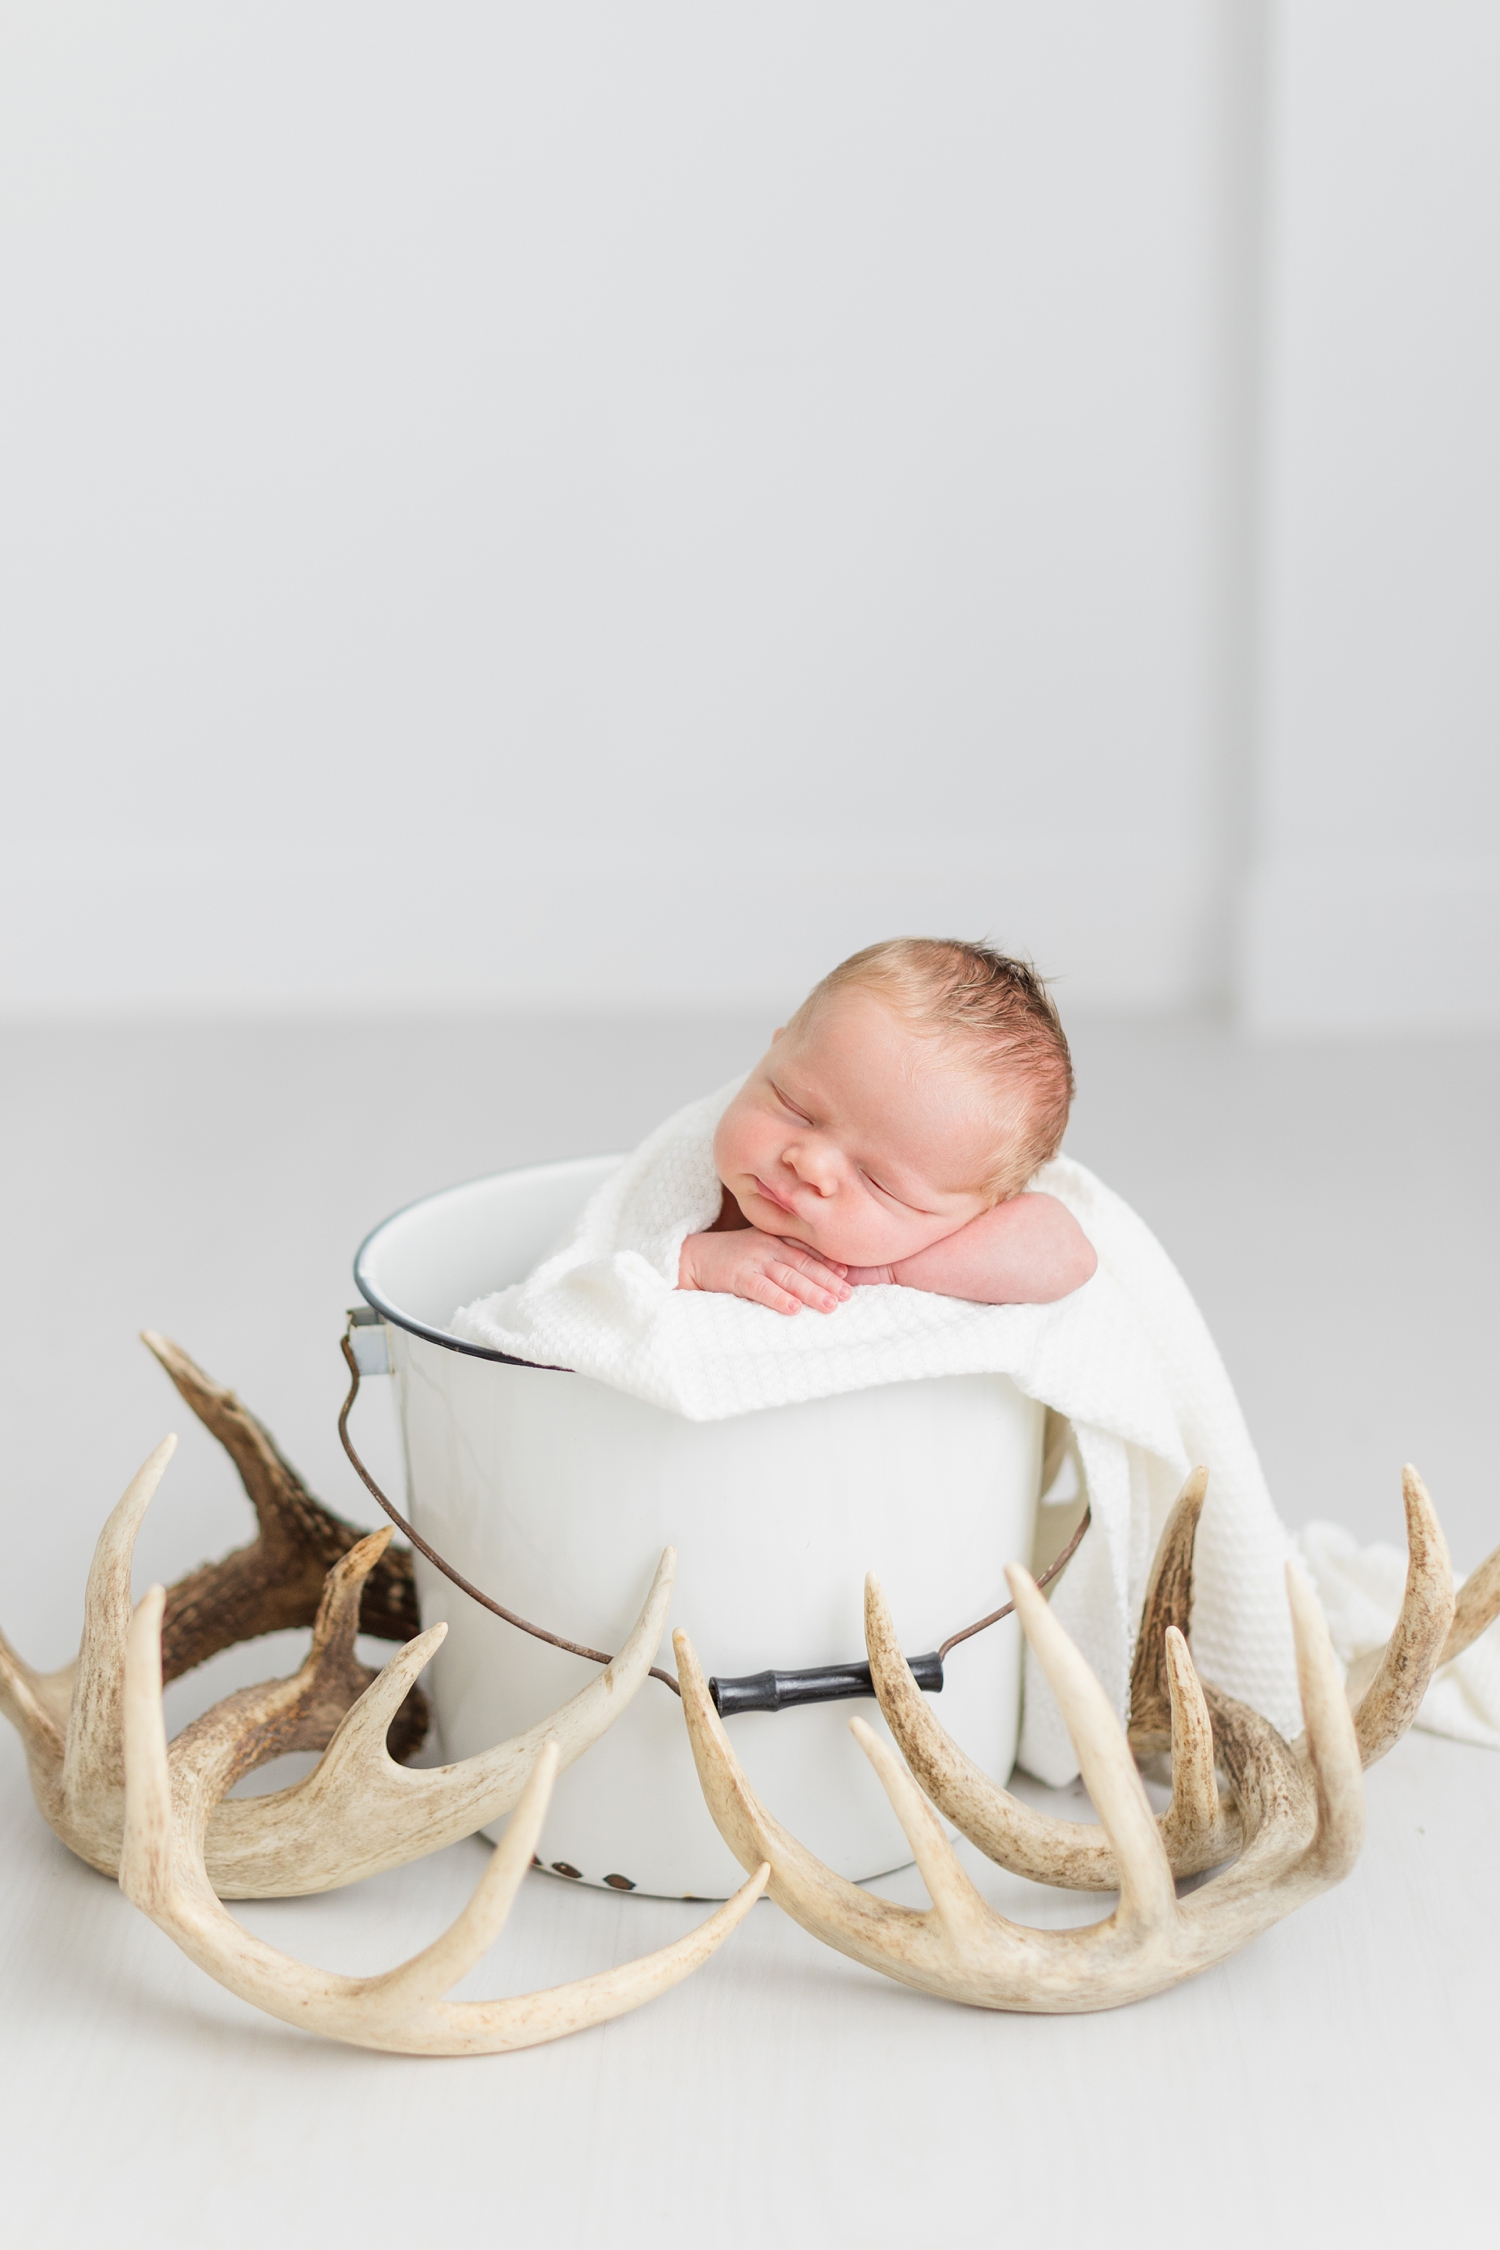 Baby Wyatt sleeps peacefully in a white bucket surrounded by deer antlers | CB Studio